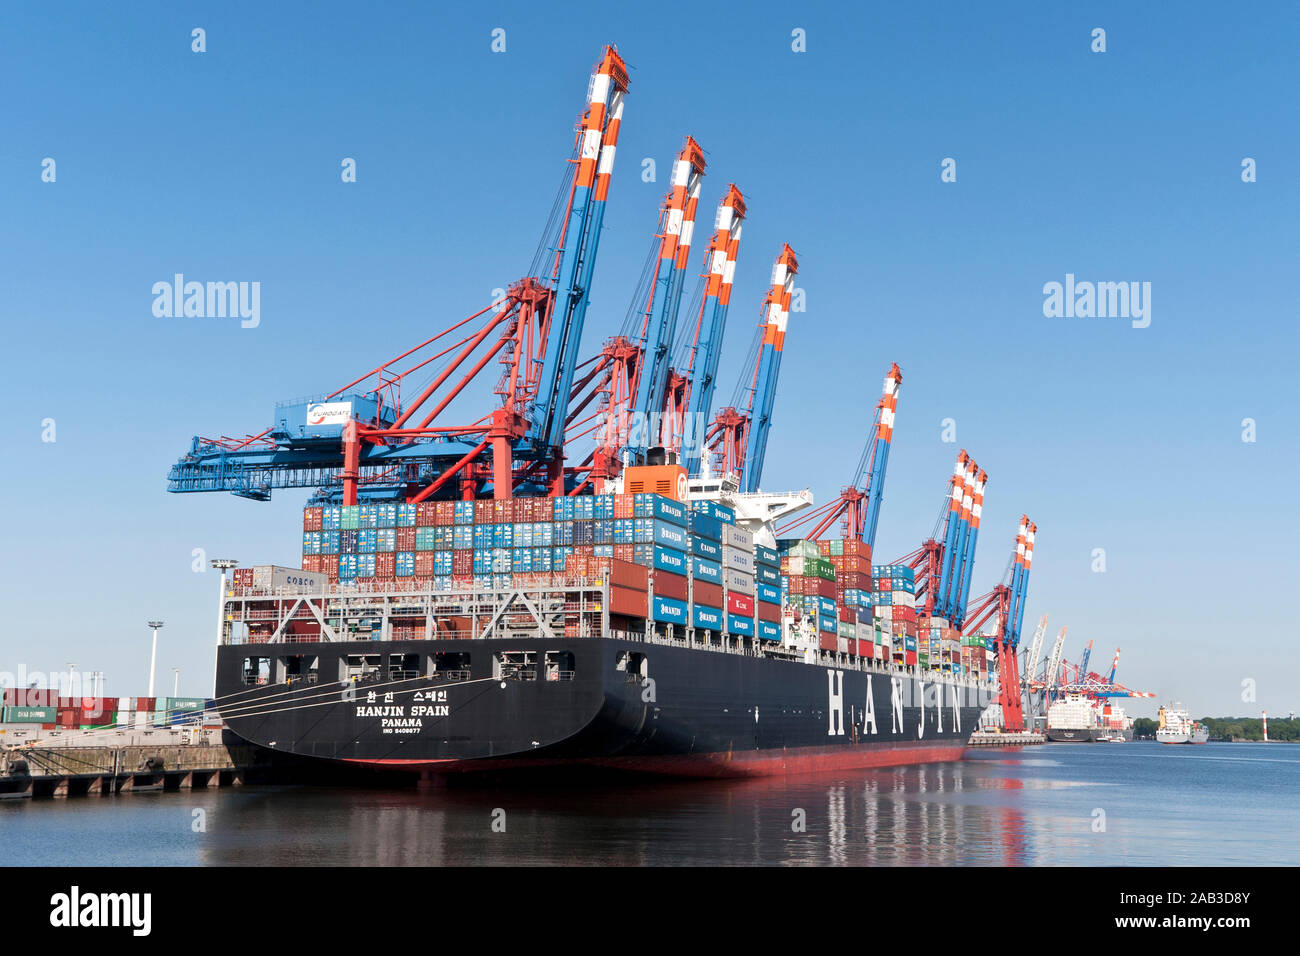 Containerschiffe am Containerterminal Burchardkai im Hamburger Hafen |Container ships at the Port of Hamburg container terminal Burchardkai| Stock Photo